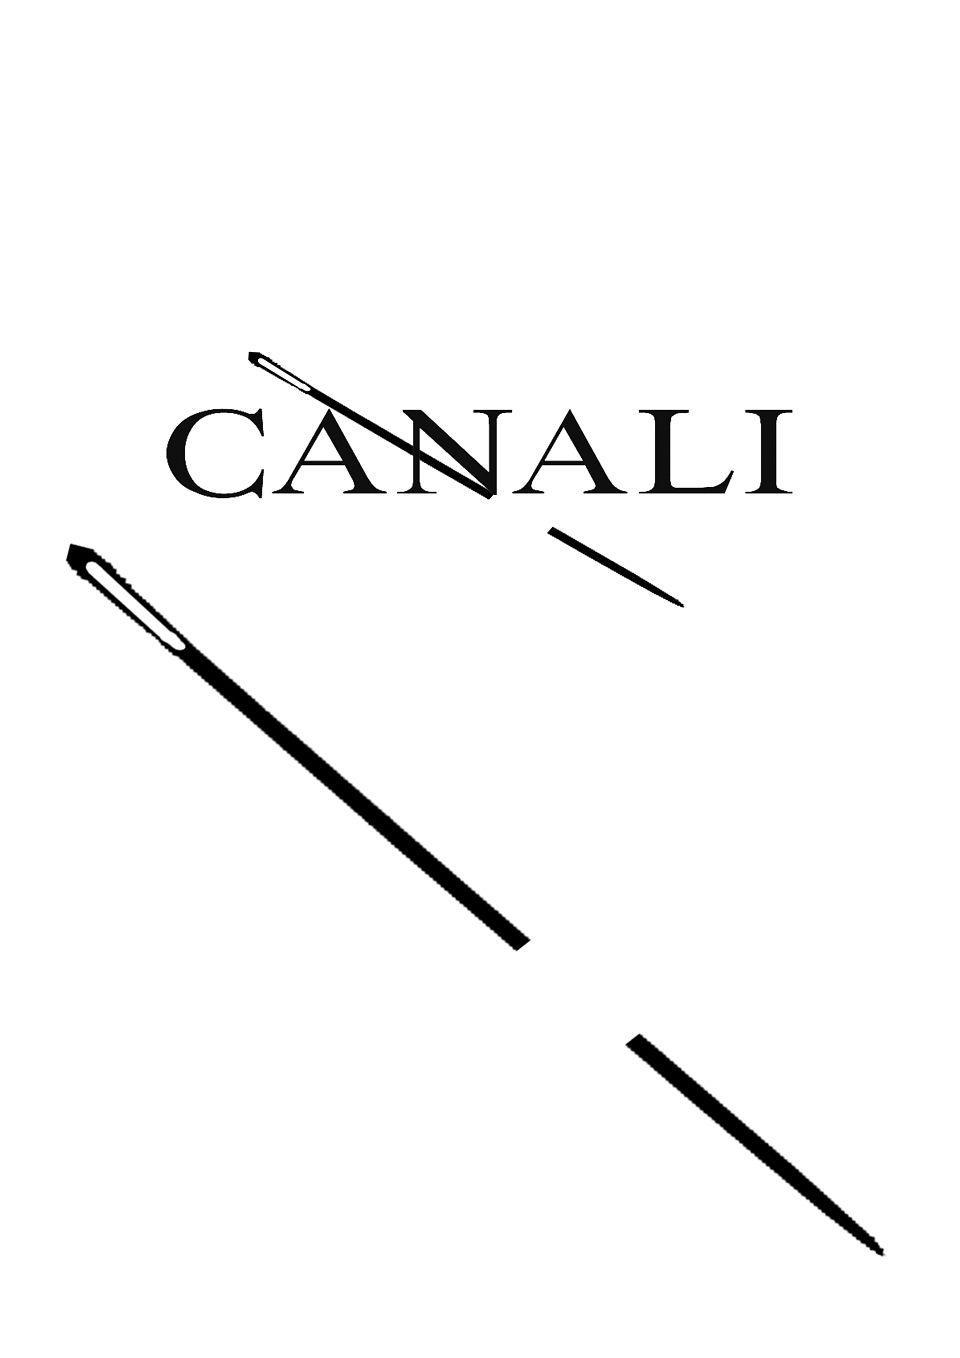 Canali Logo - CANALI MENSWEAR (CONCEPT LOGO DESIGN) by Adriana Manzella for CANALI ...